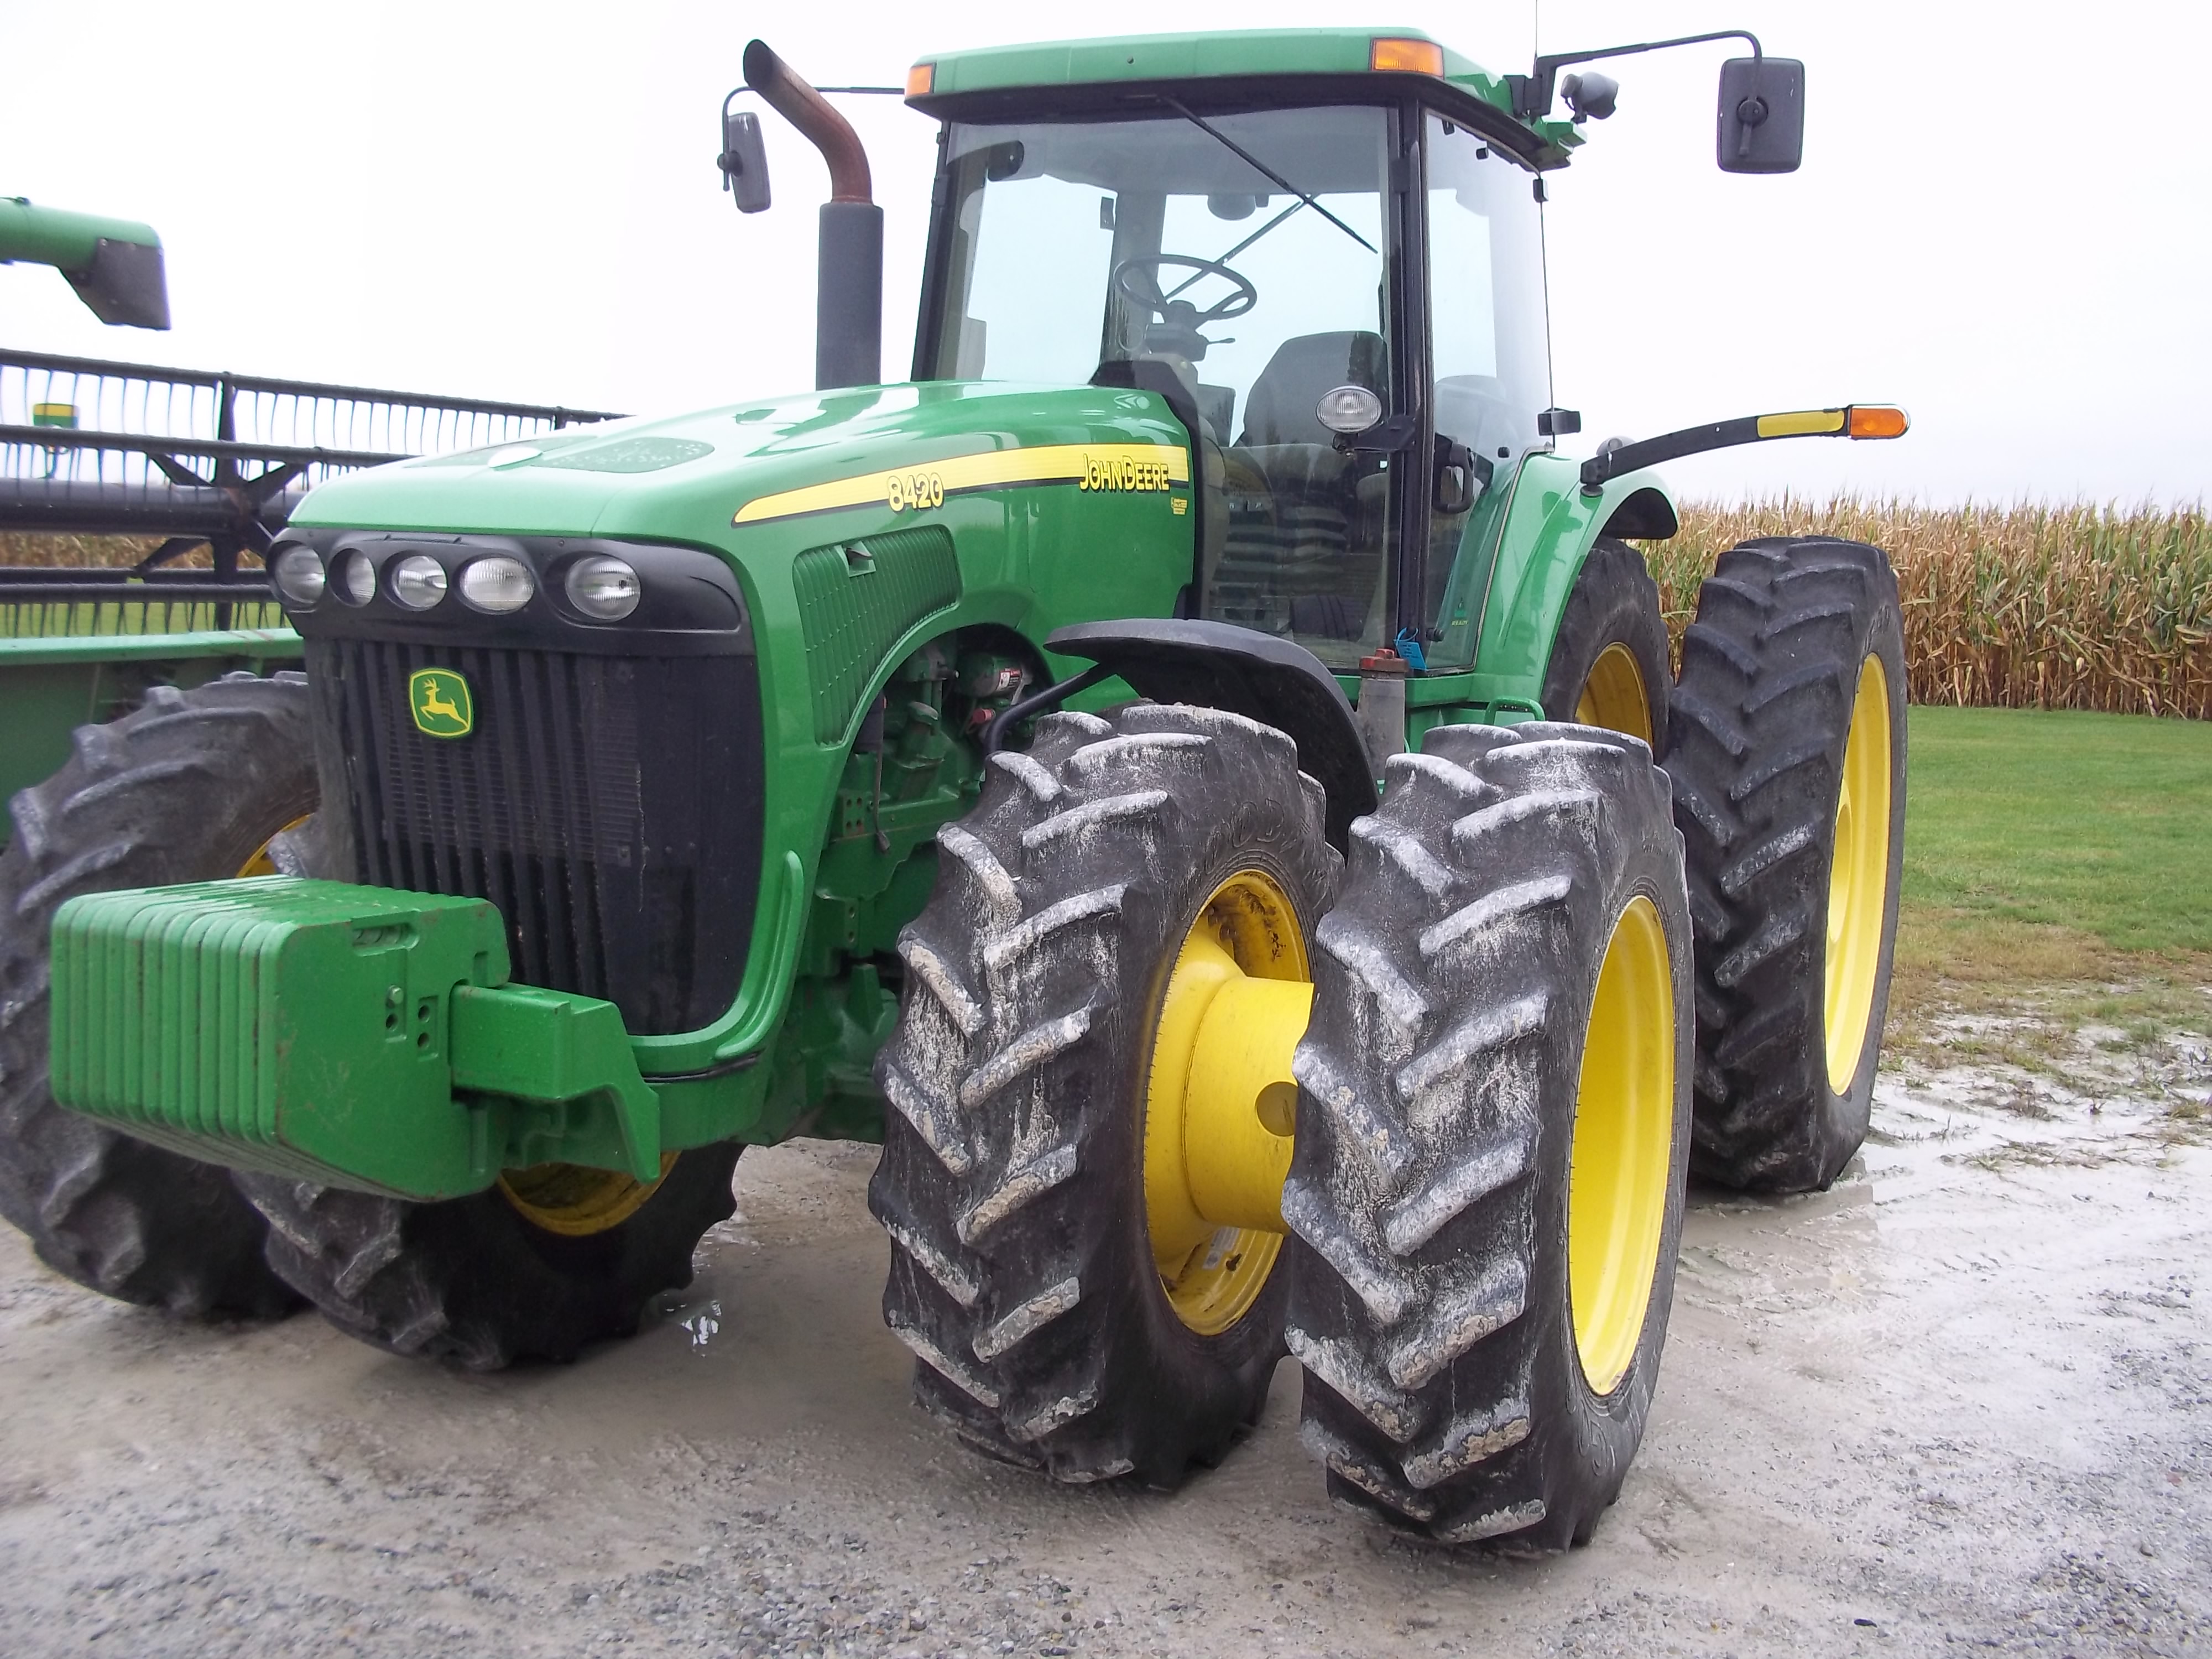 236hp John Deere 8420 | Farm Equipment | Pinterest